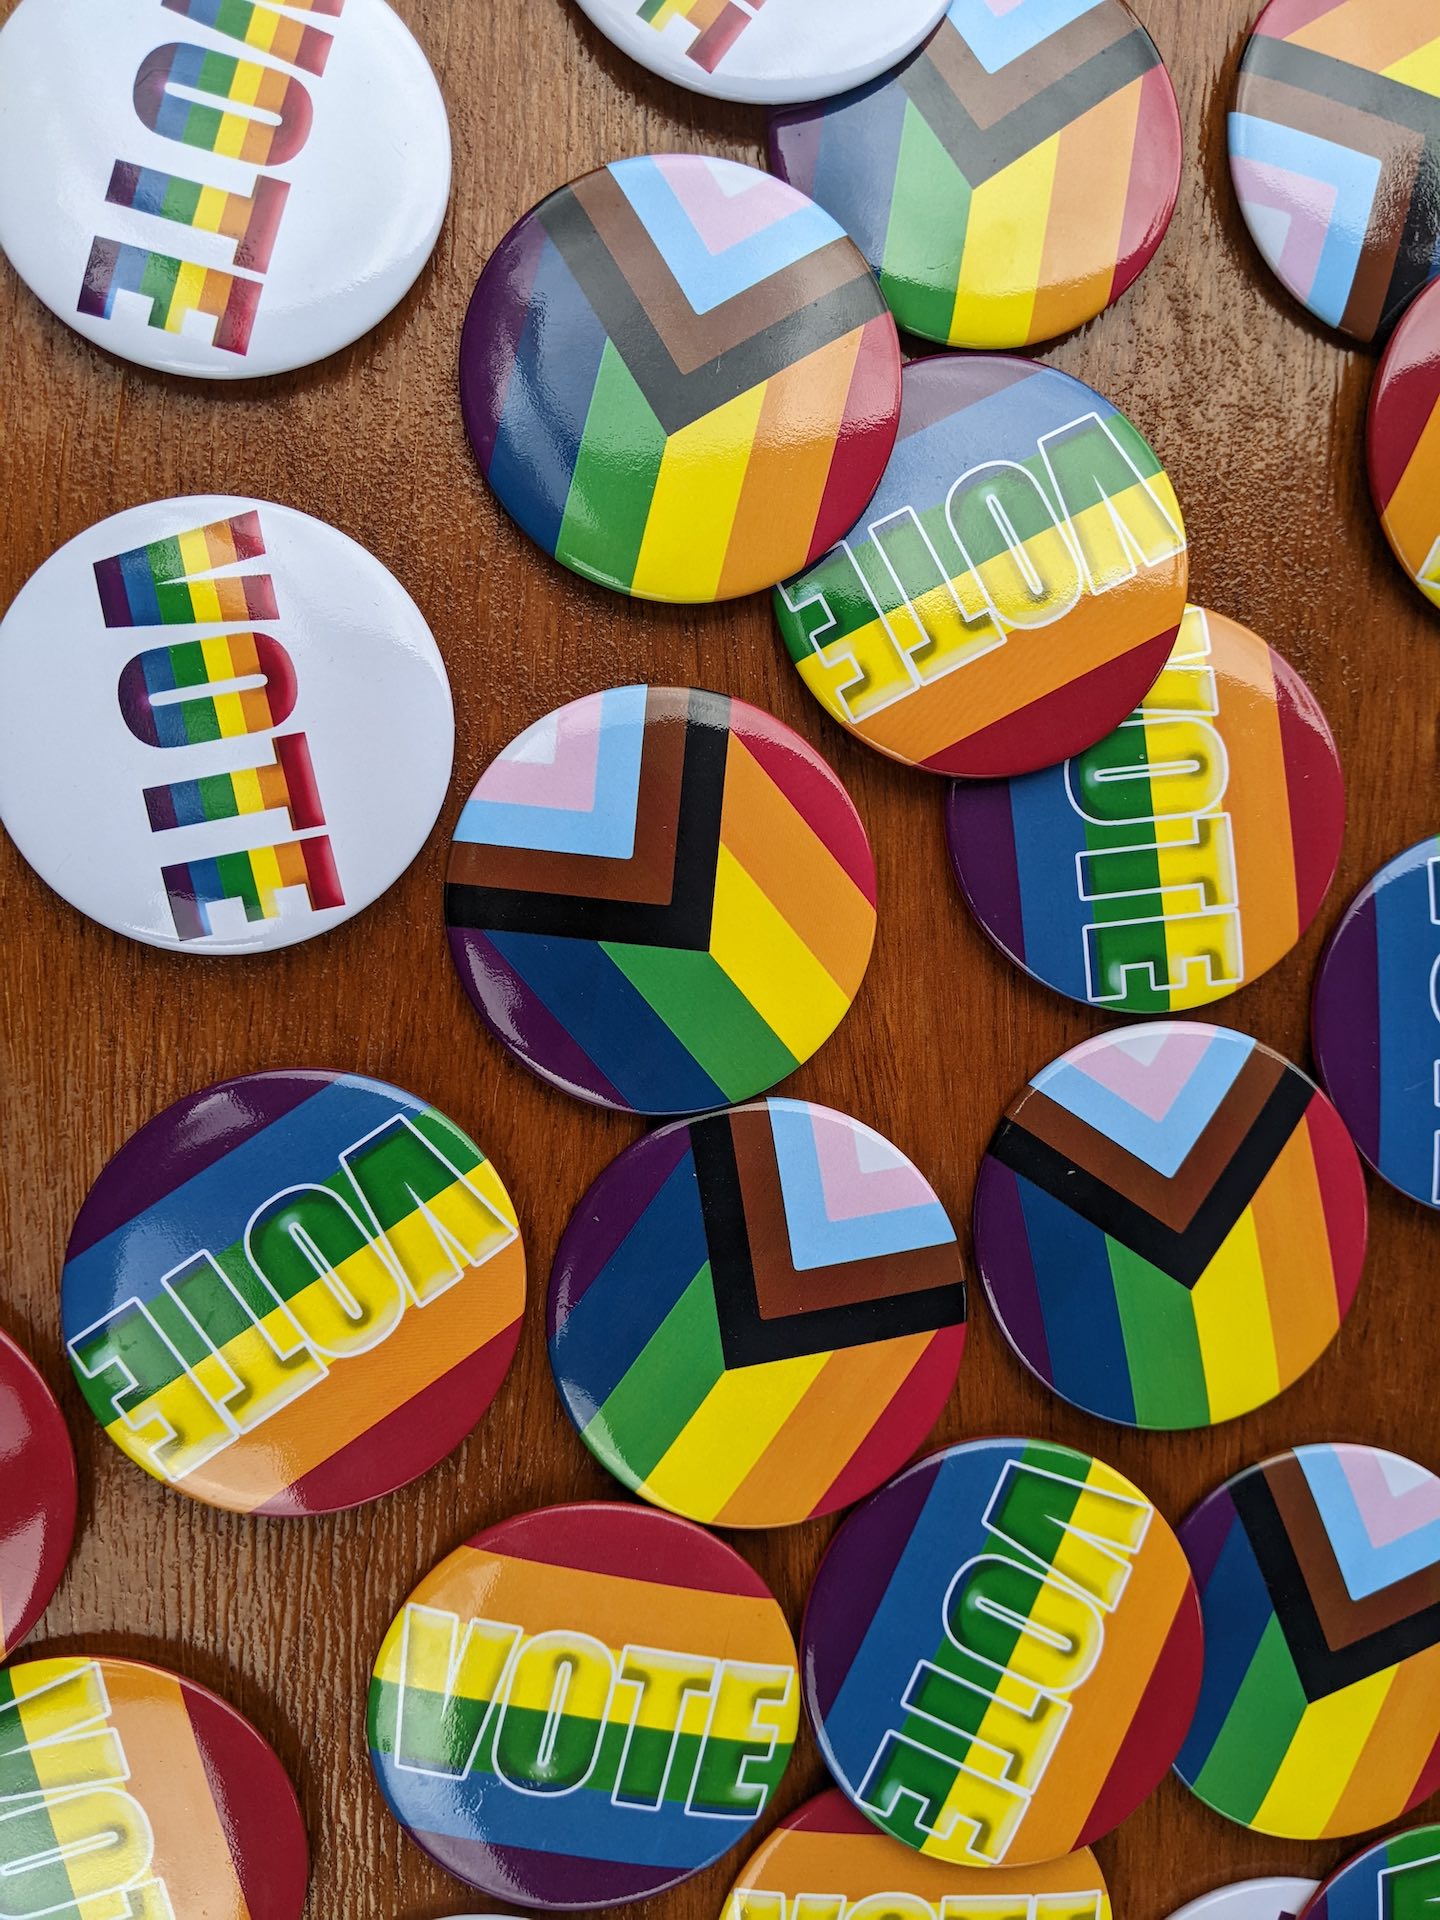 Ann Arbor Pride returns with fun, love, and community. The Washtenaw